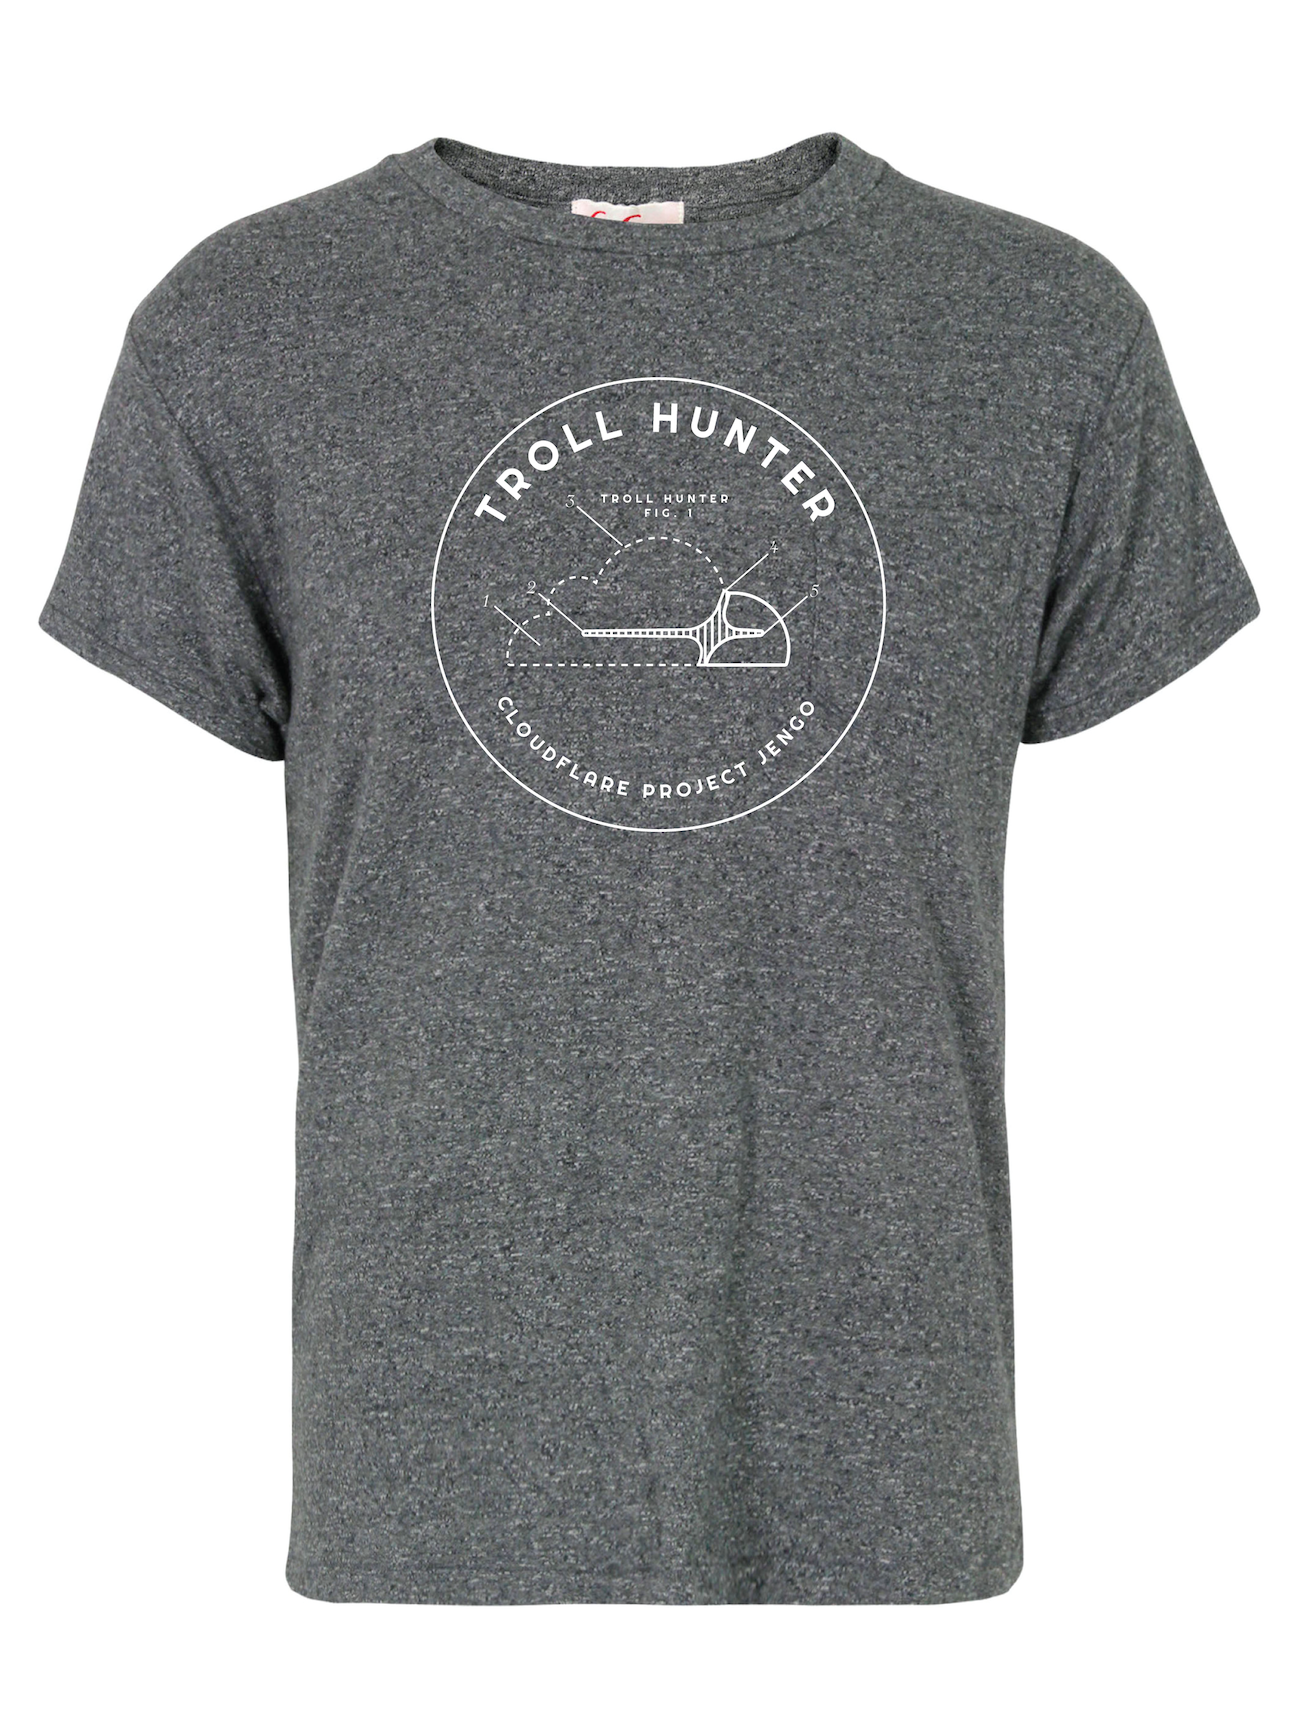 Troll Hunter Shirt Design